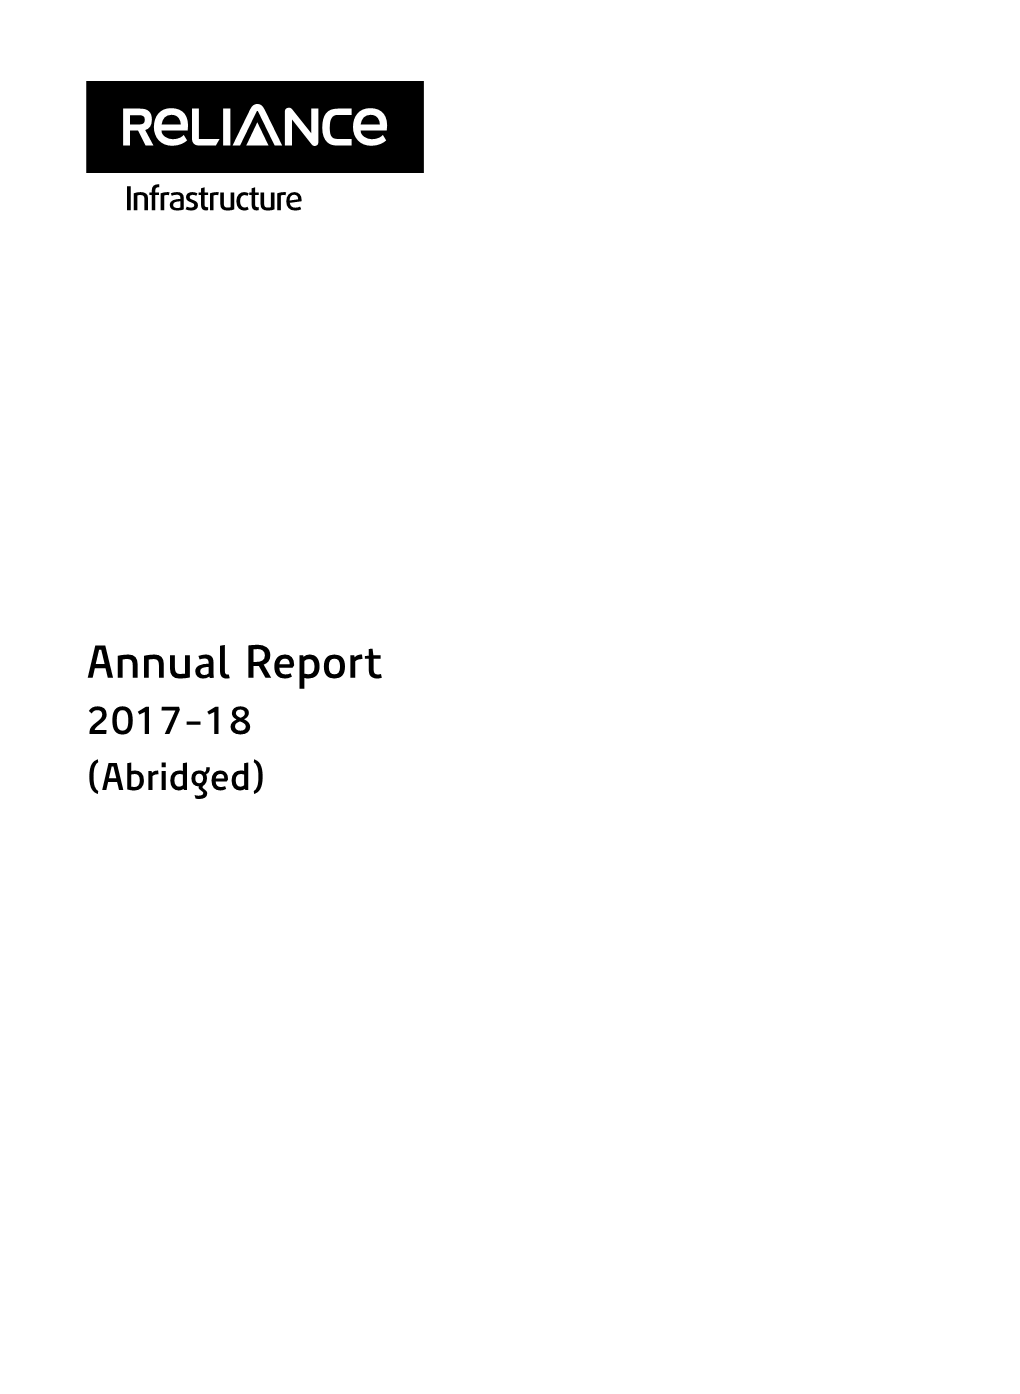 Annual Report 2017-18 (Abridged) Padma Vibhushan Shri Dhirubhai H